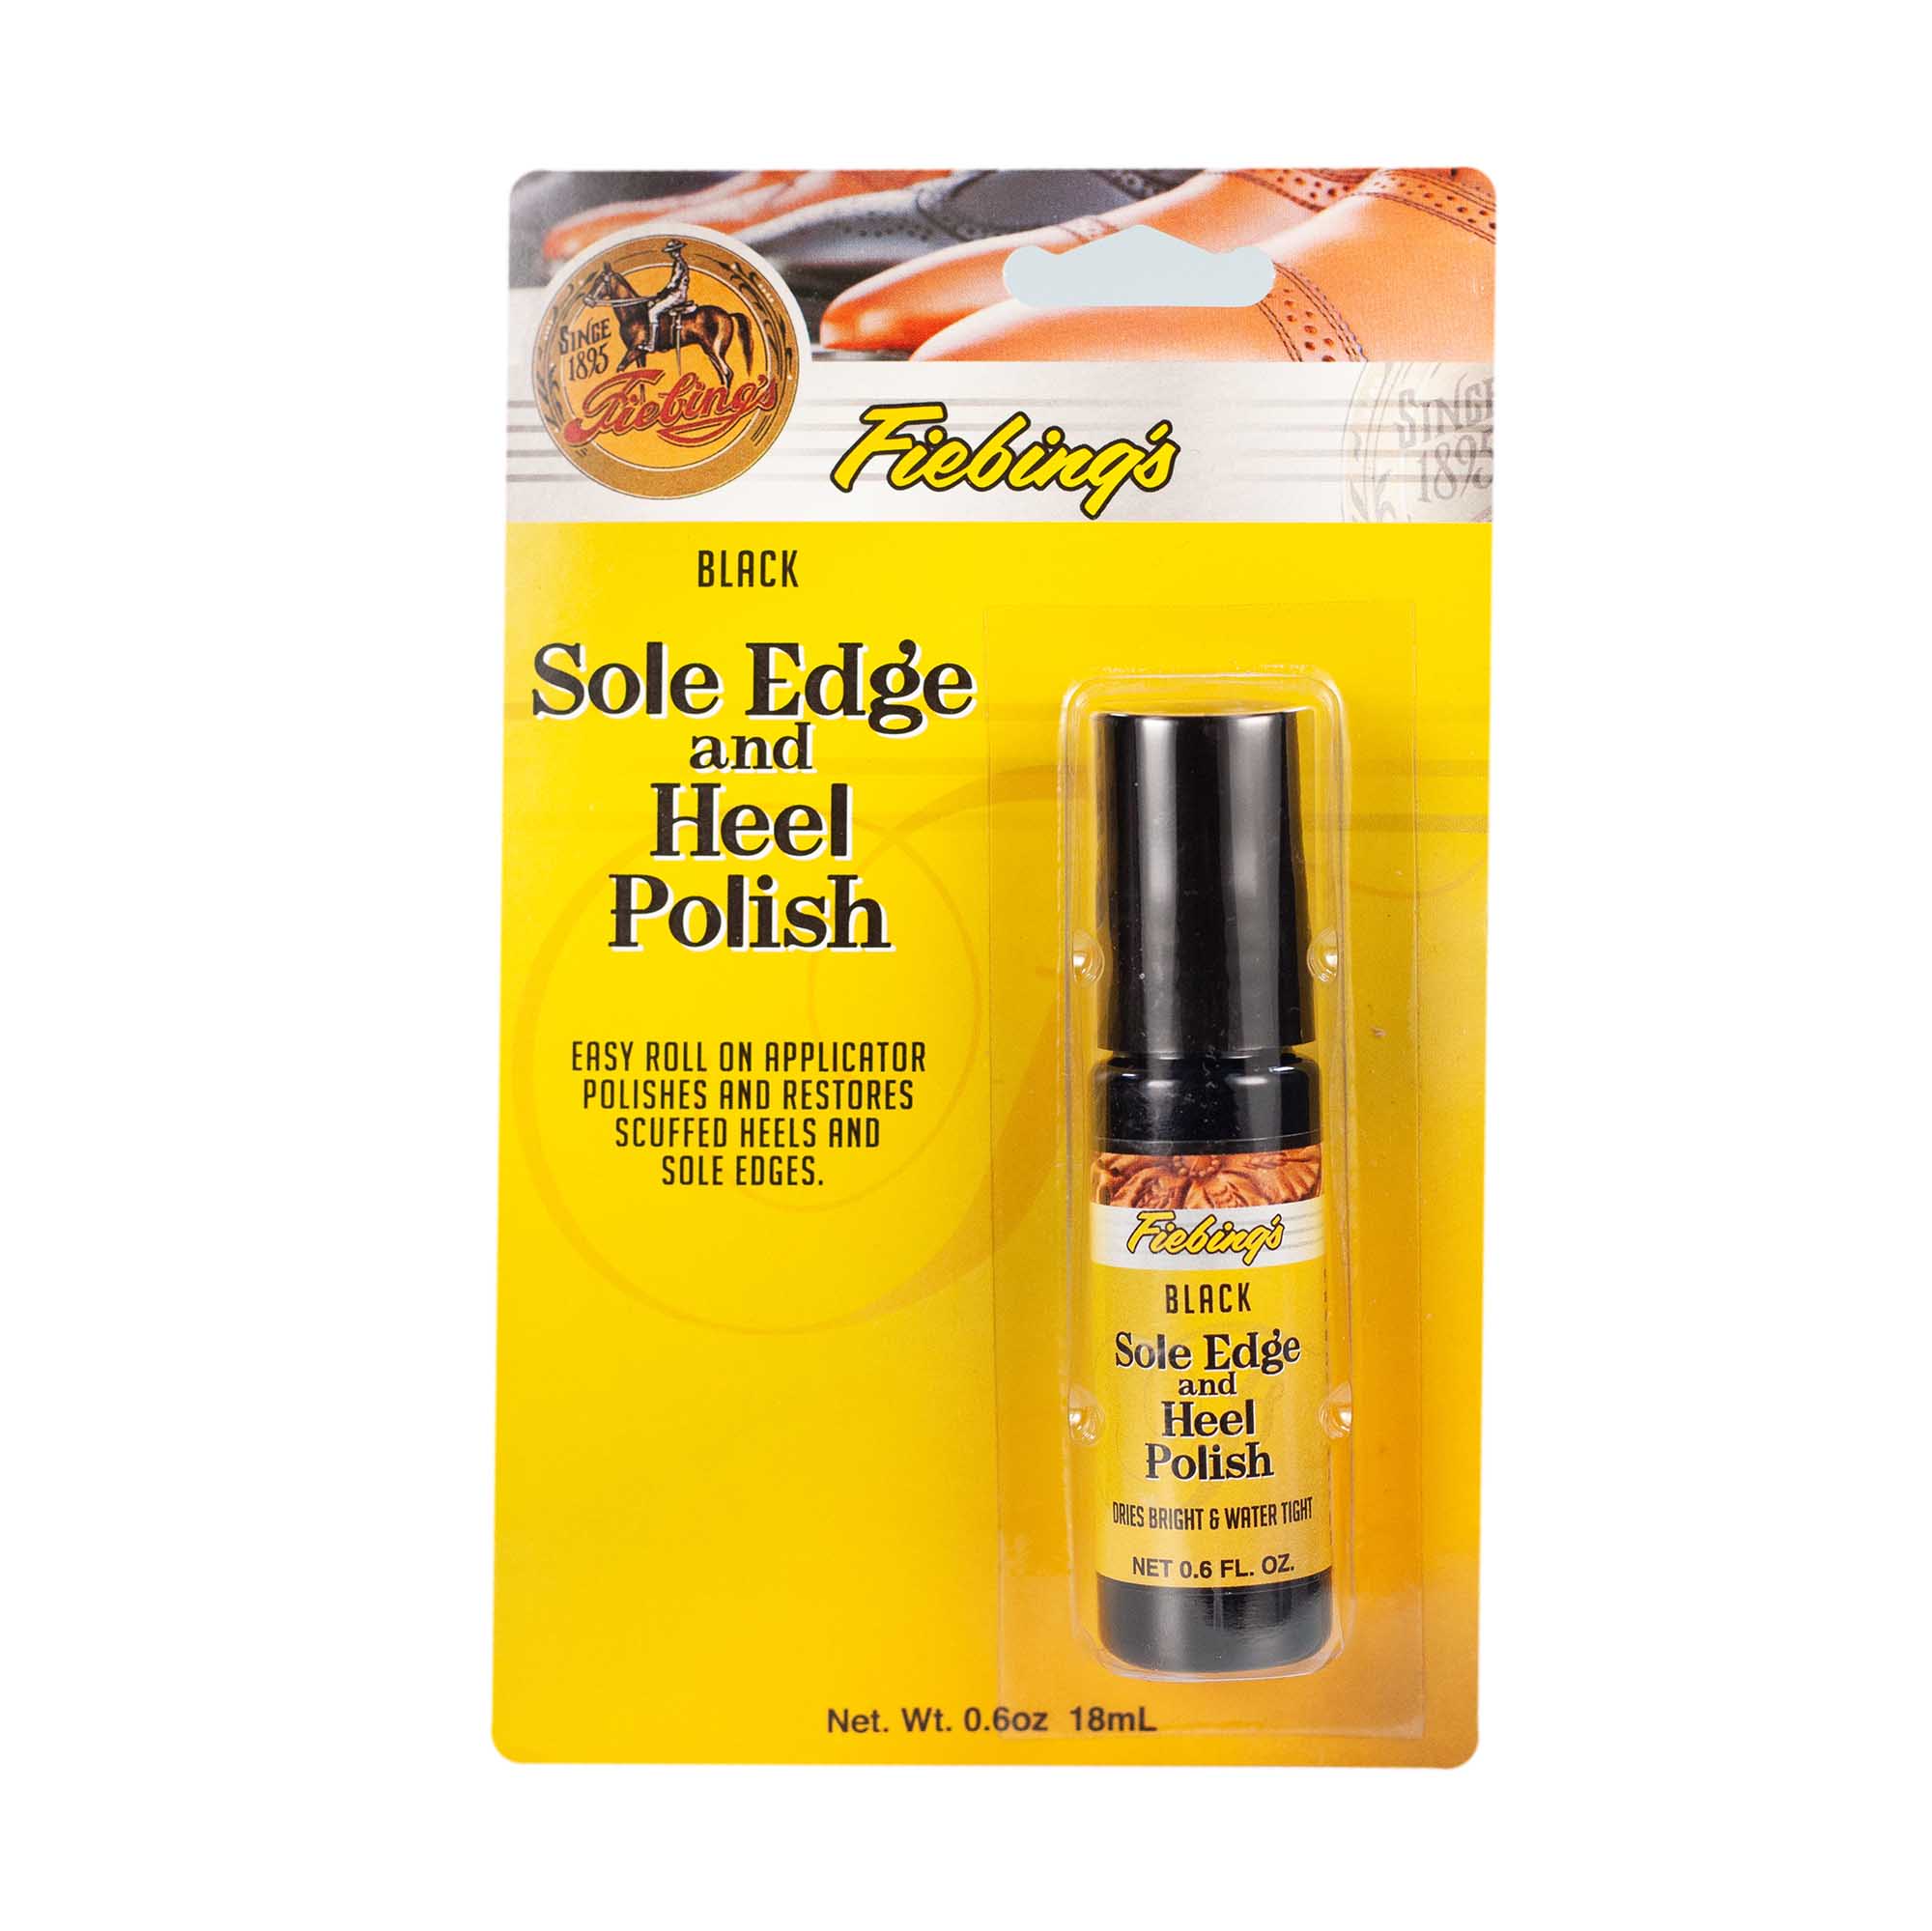 Sole Edge and Heel Polish - Fiebing's